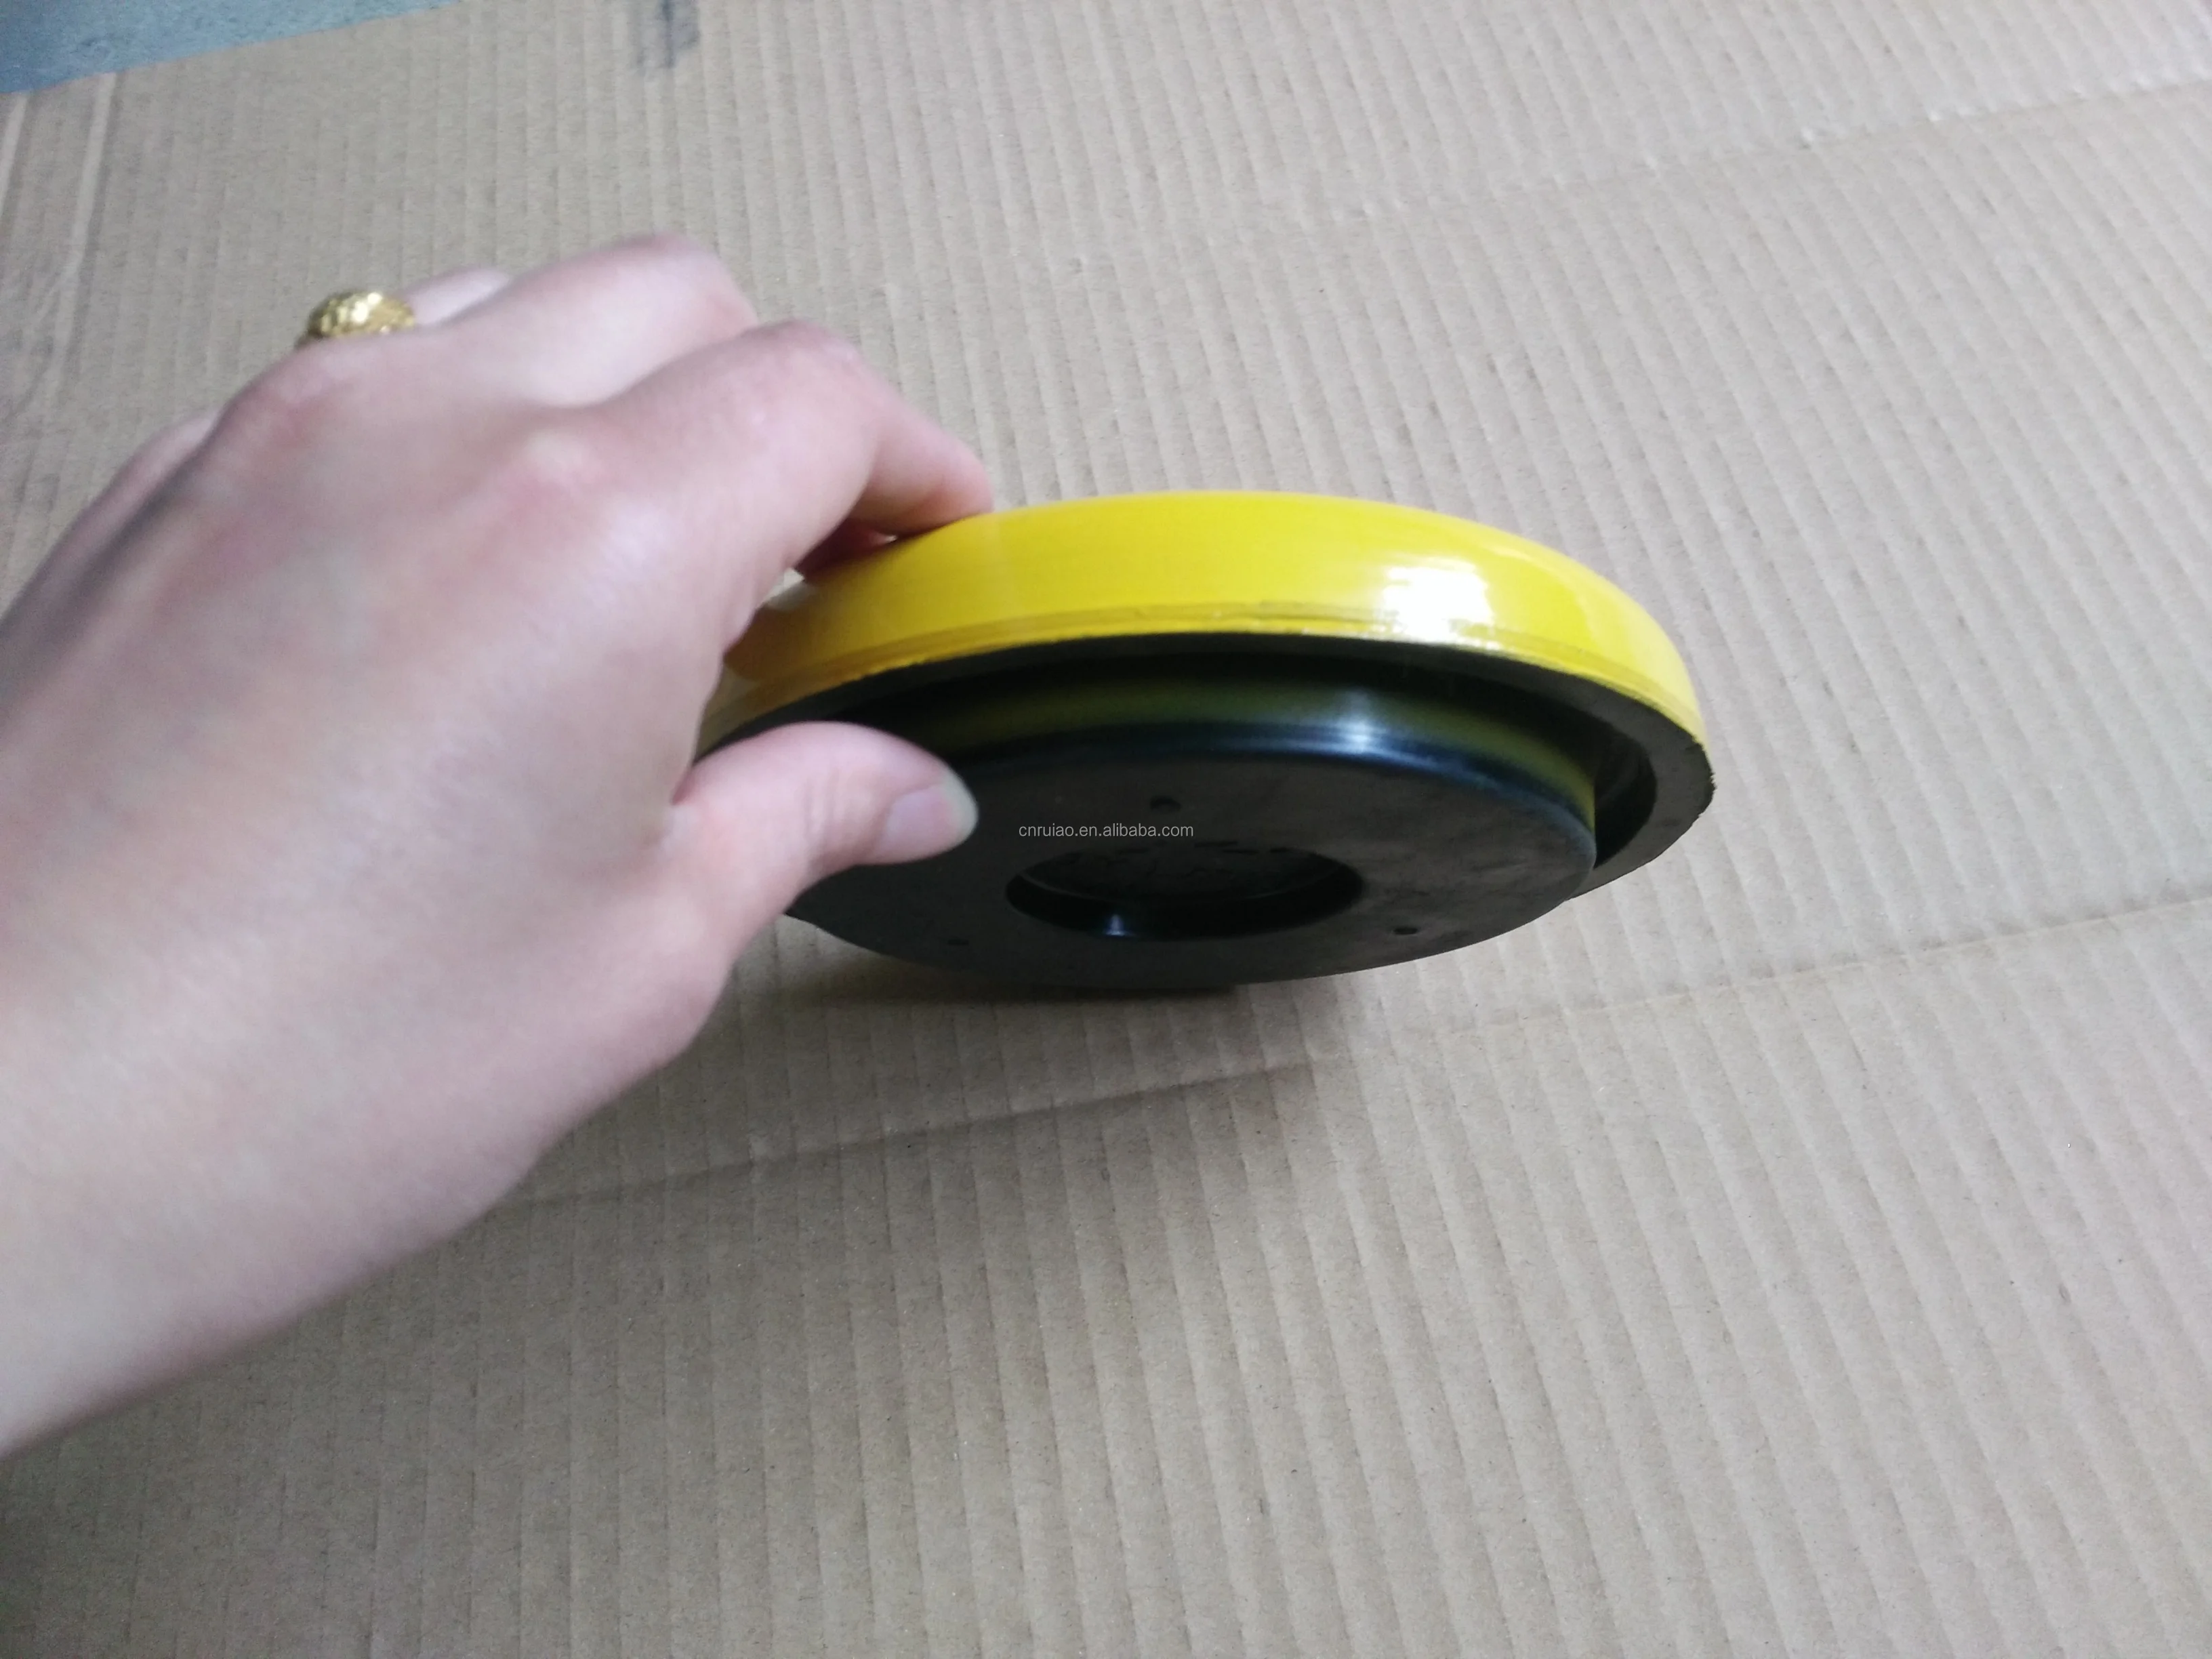 
Adjustable rubber Anti vibration mount machine tool level pad and machine mount 